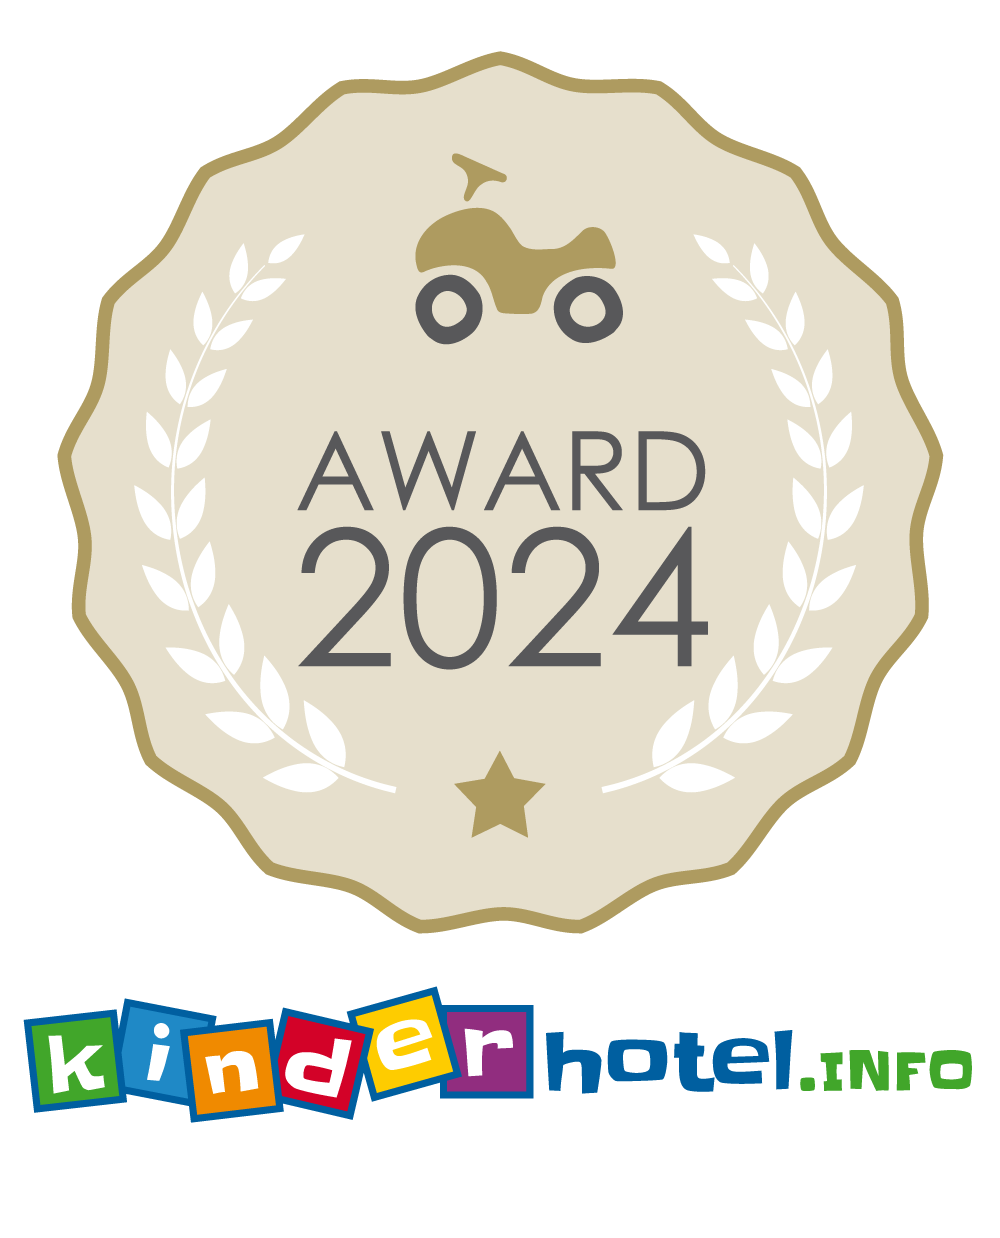 Kinderhotel.info Award 2024